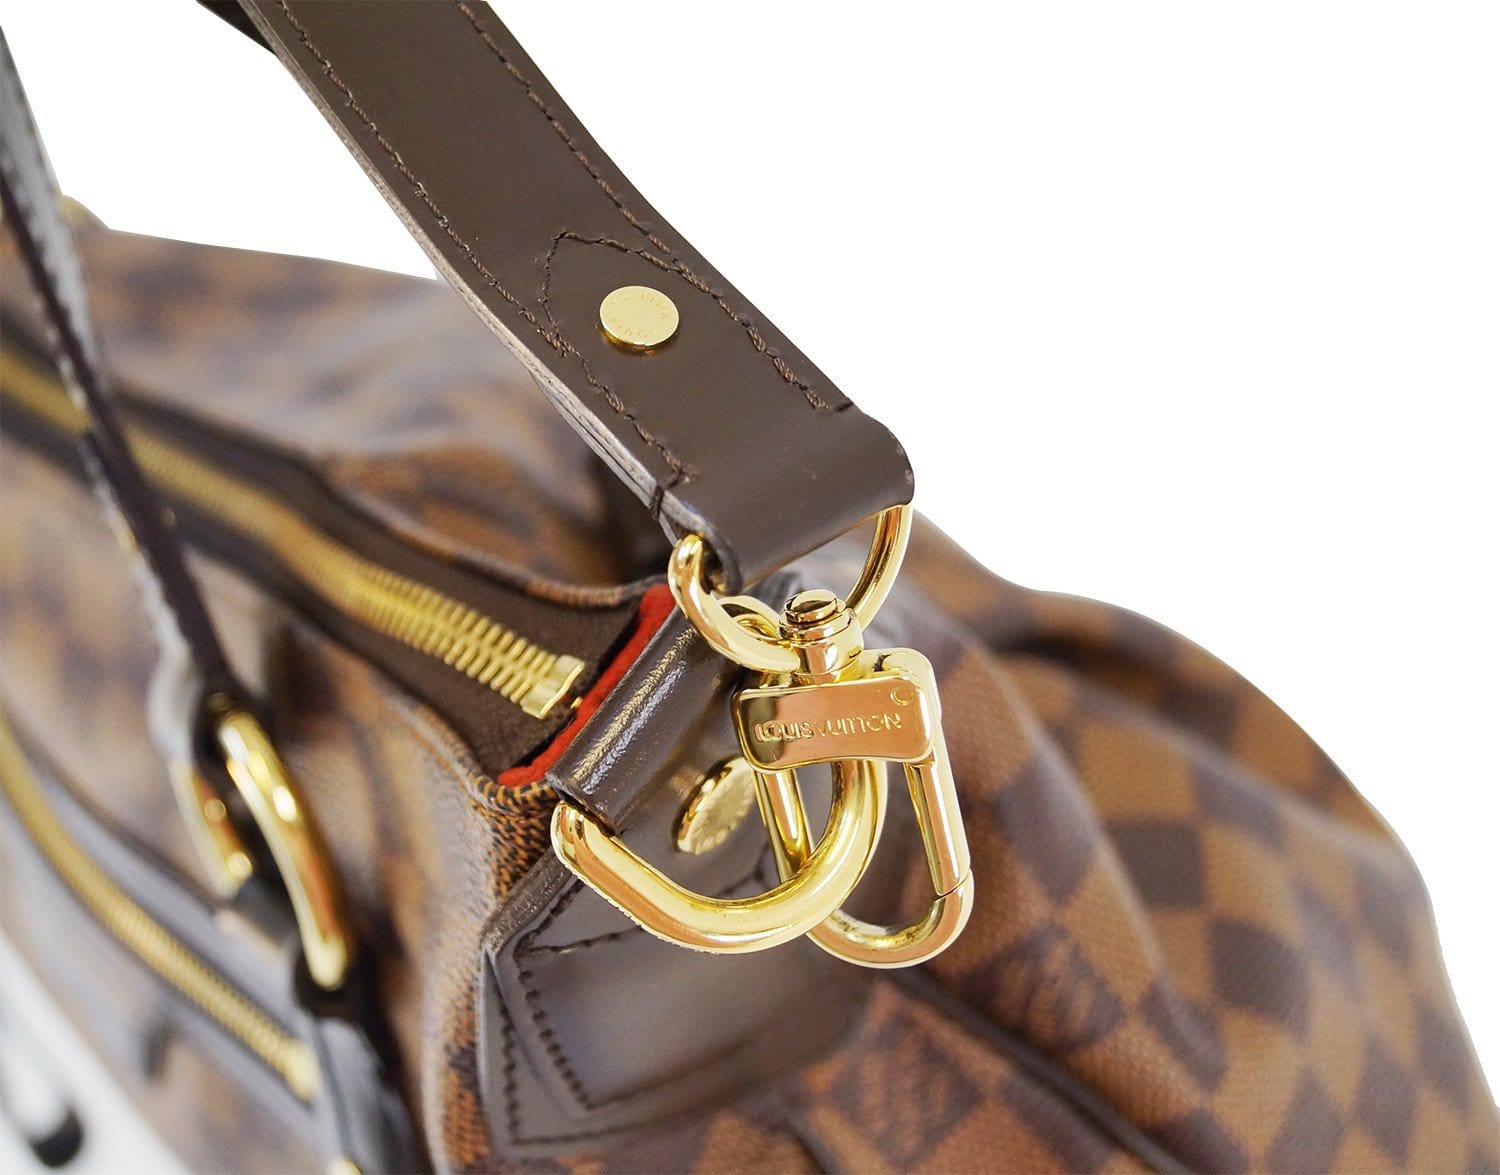 Luxury Handbags LOUIS VUITTON Damier Ebene Evora MM 810-00353